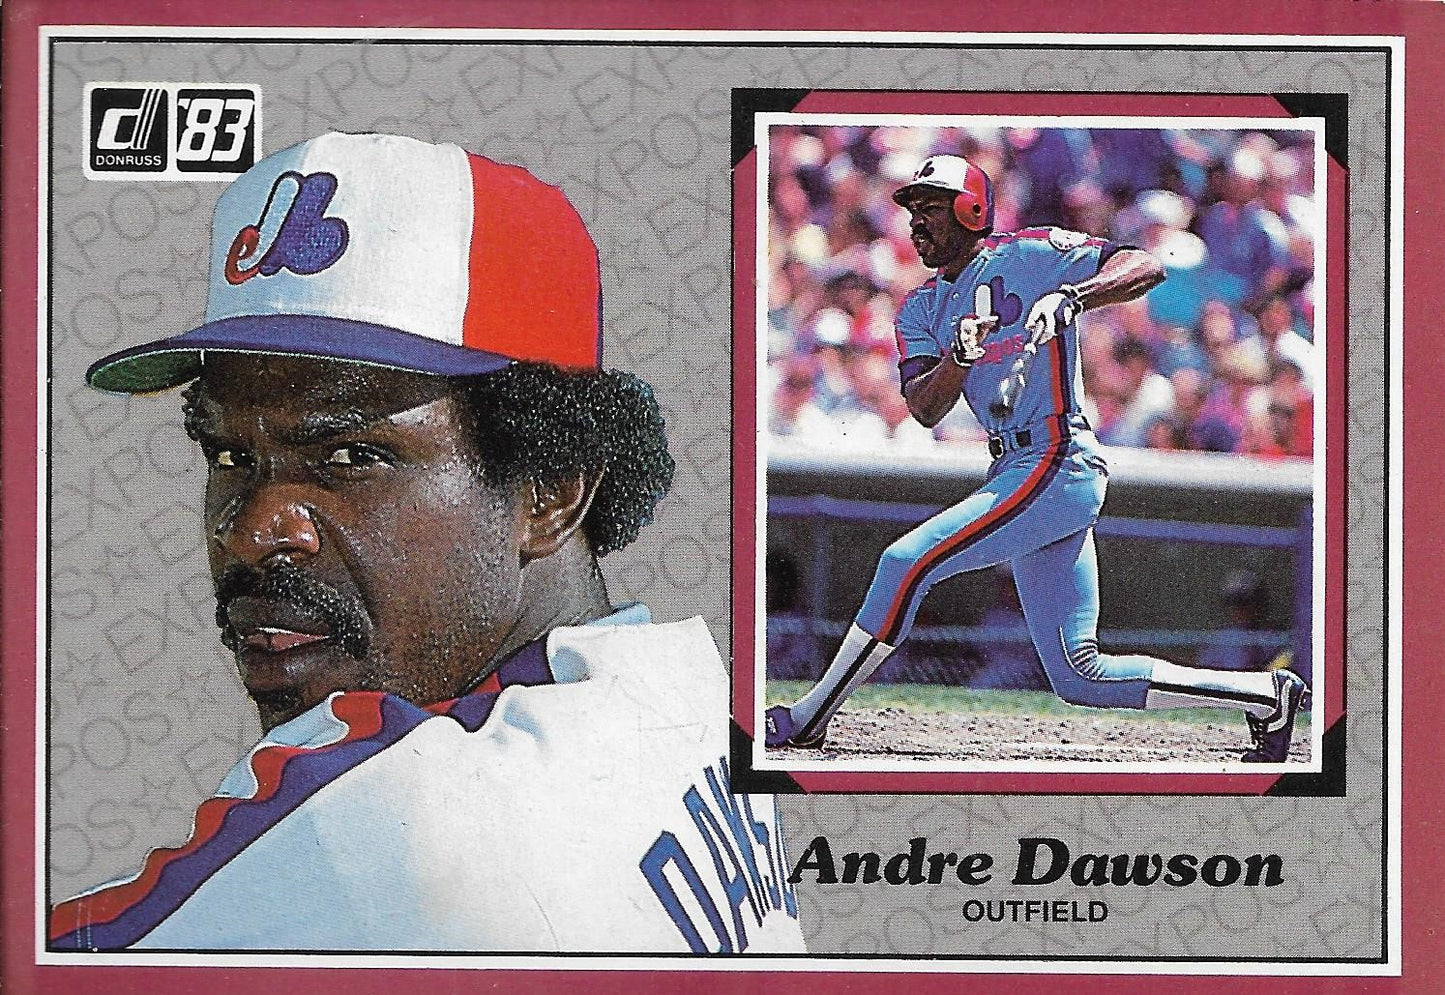 1983 DONRUSS ALL STAR - SUPERSTAR CARD #9 - ANDRE DAWSON - MONTREAL EXPOS